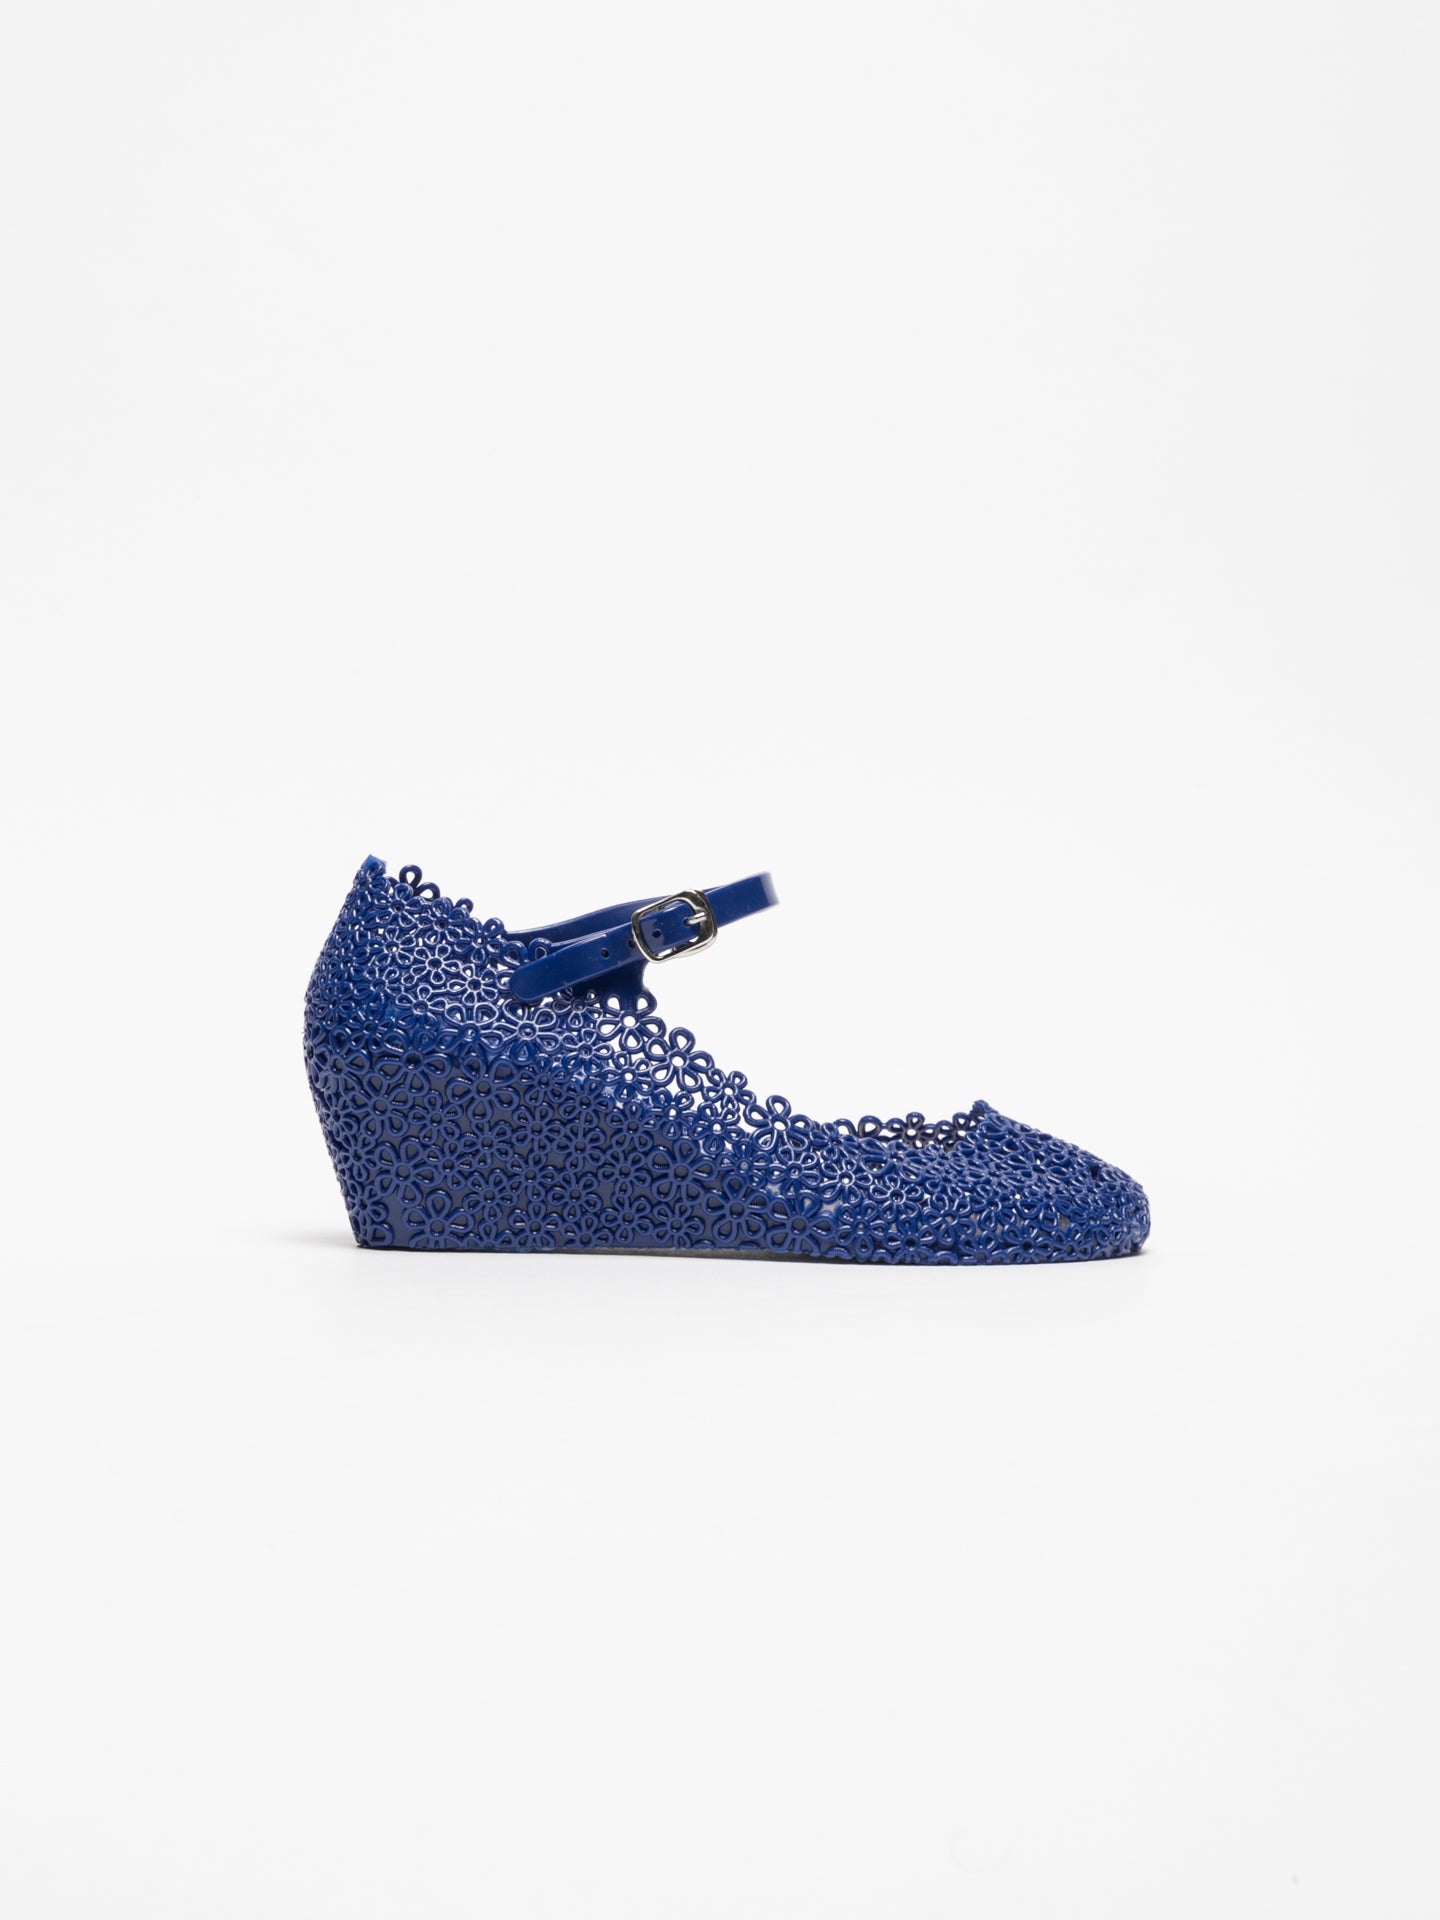 Foreva Blue Platform Shoes